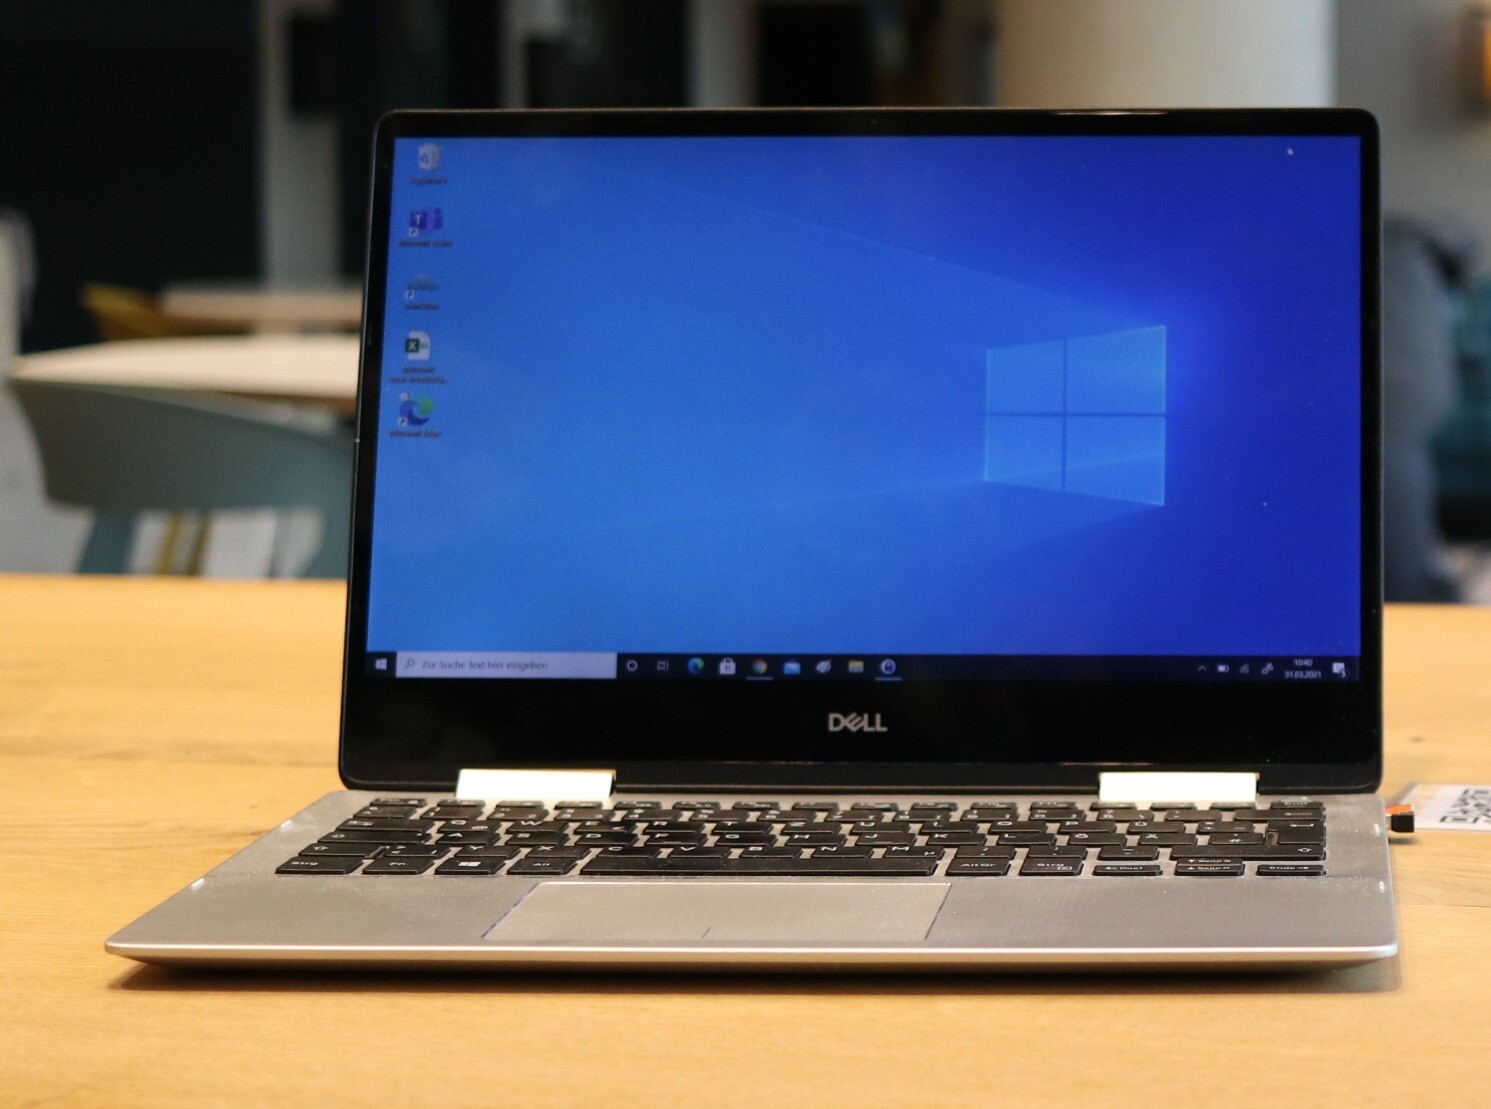 A5 Manual to accompany a Windows 10 laptop or desktop computer